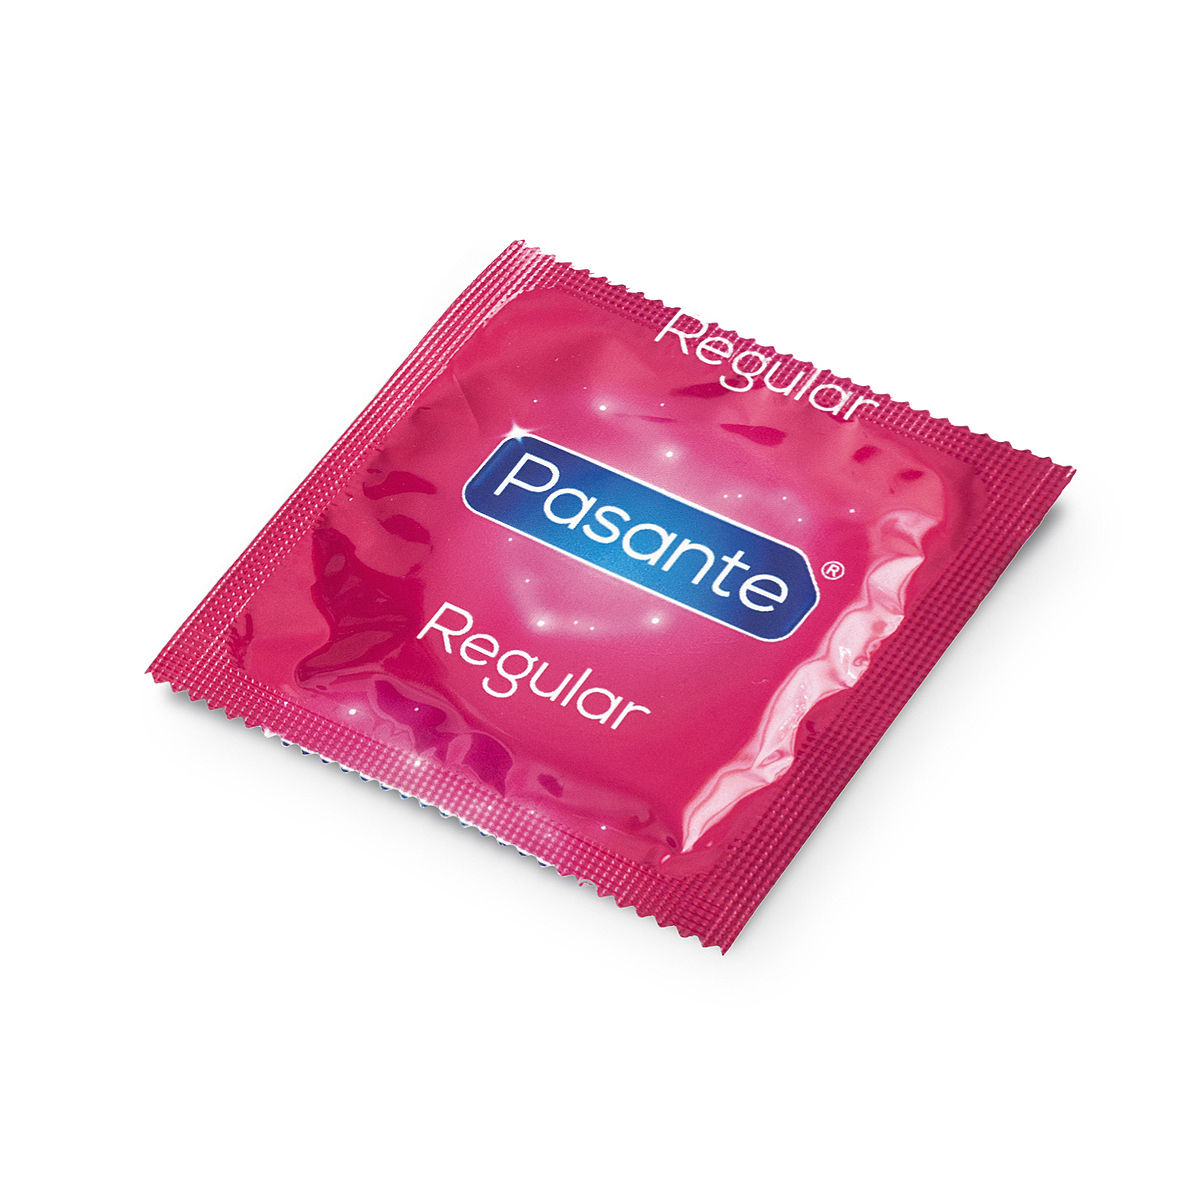 Pasante regular condoms